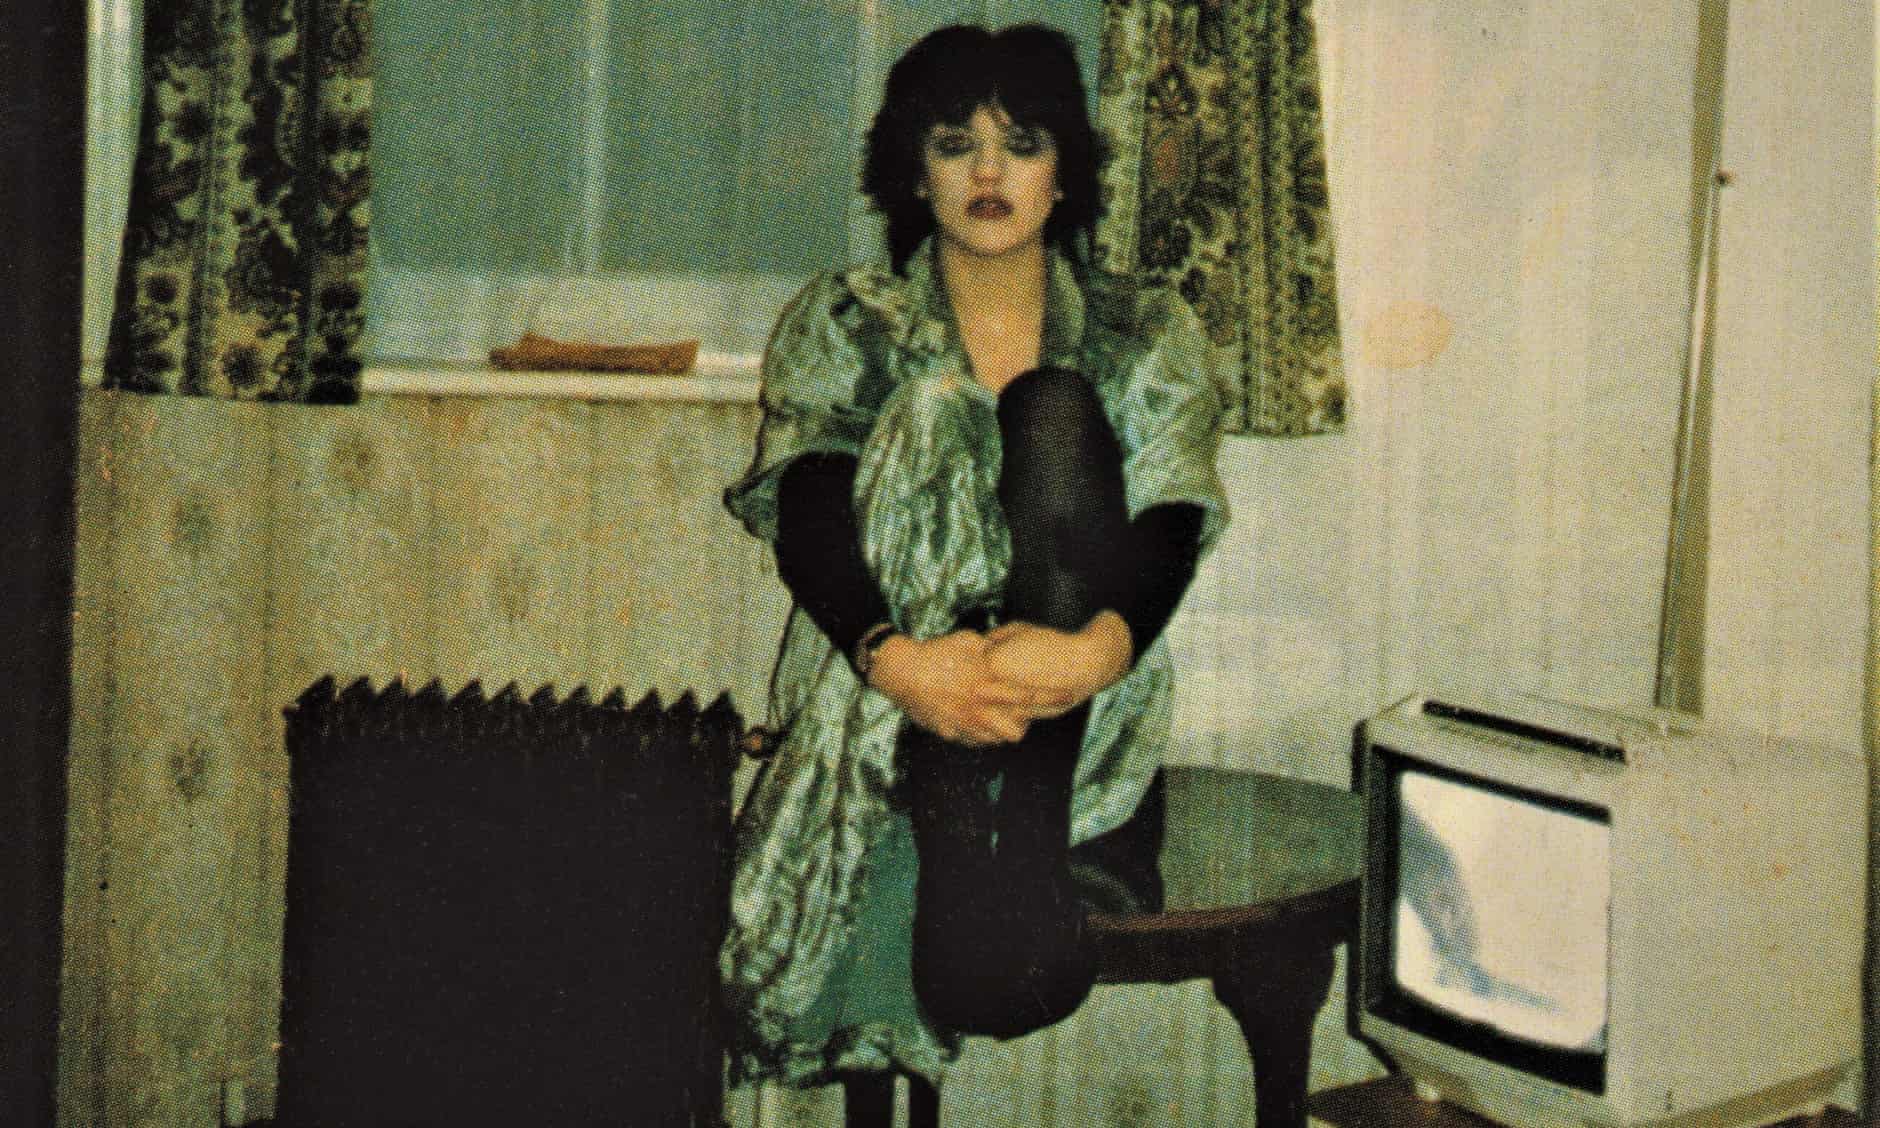 Courtney Love, Liverpool, 1982